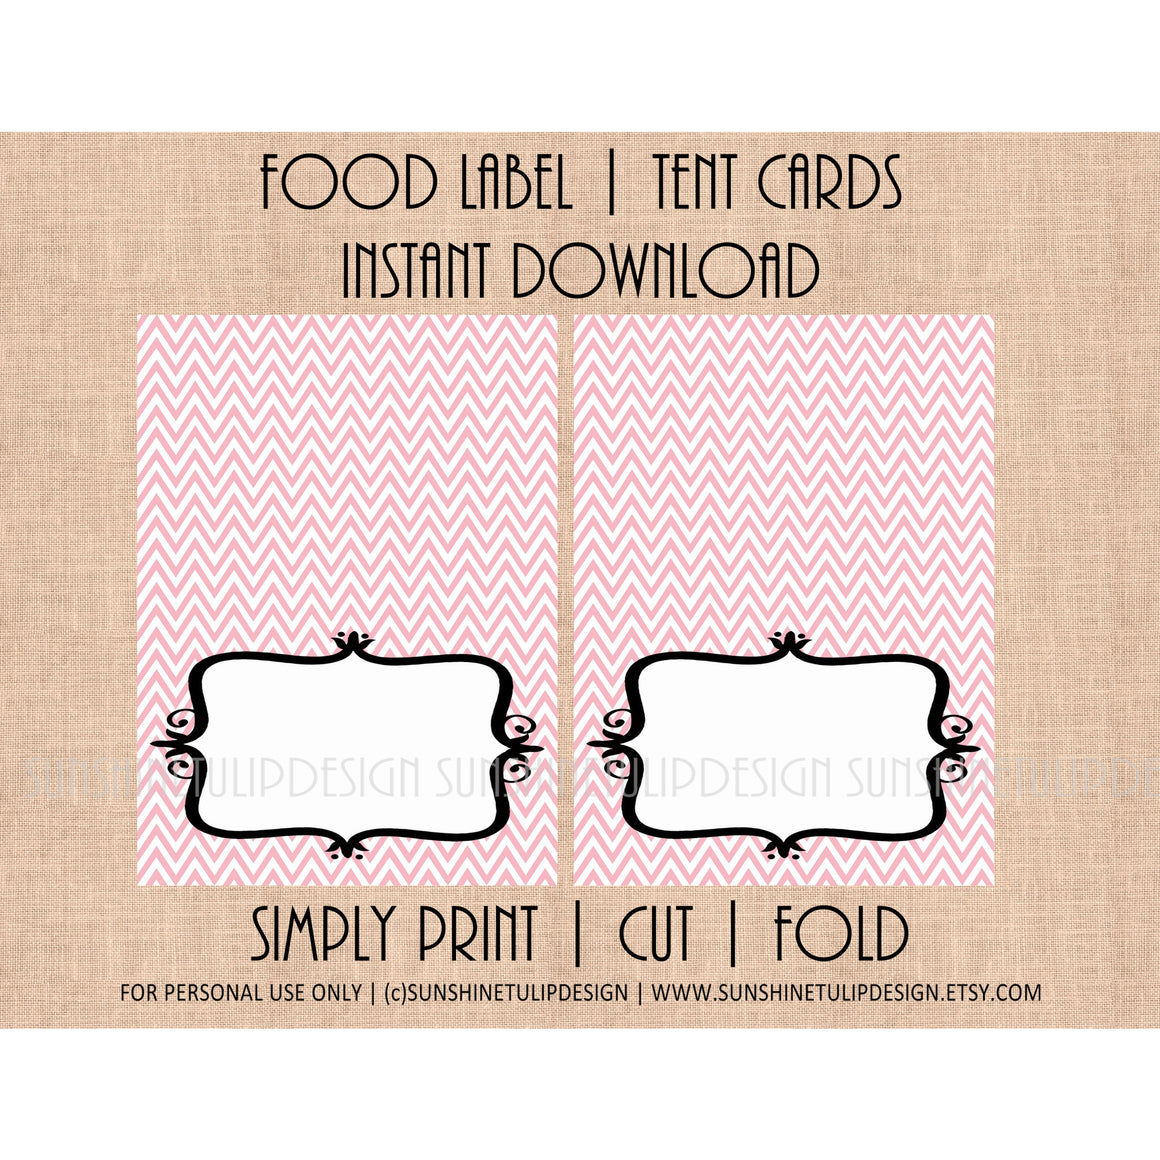 Printable Pink & White Chevron Food Label Tent Cards - Sunshinetulipdesign